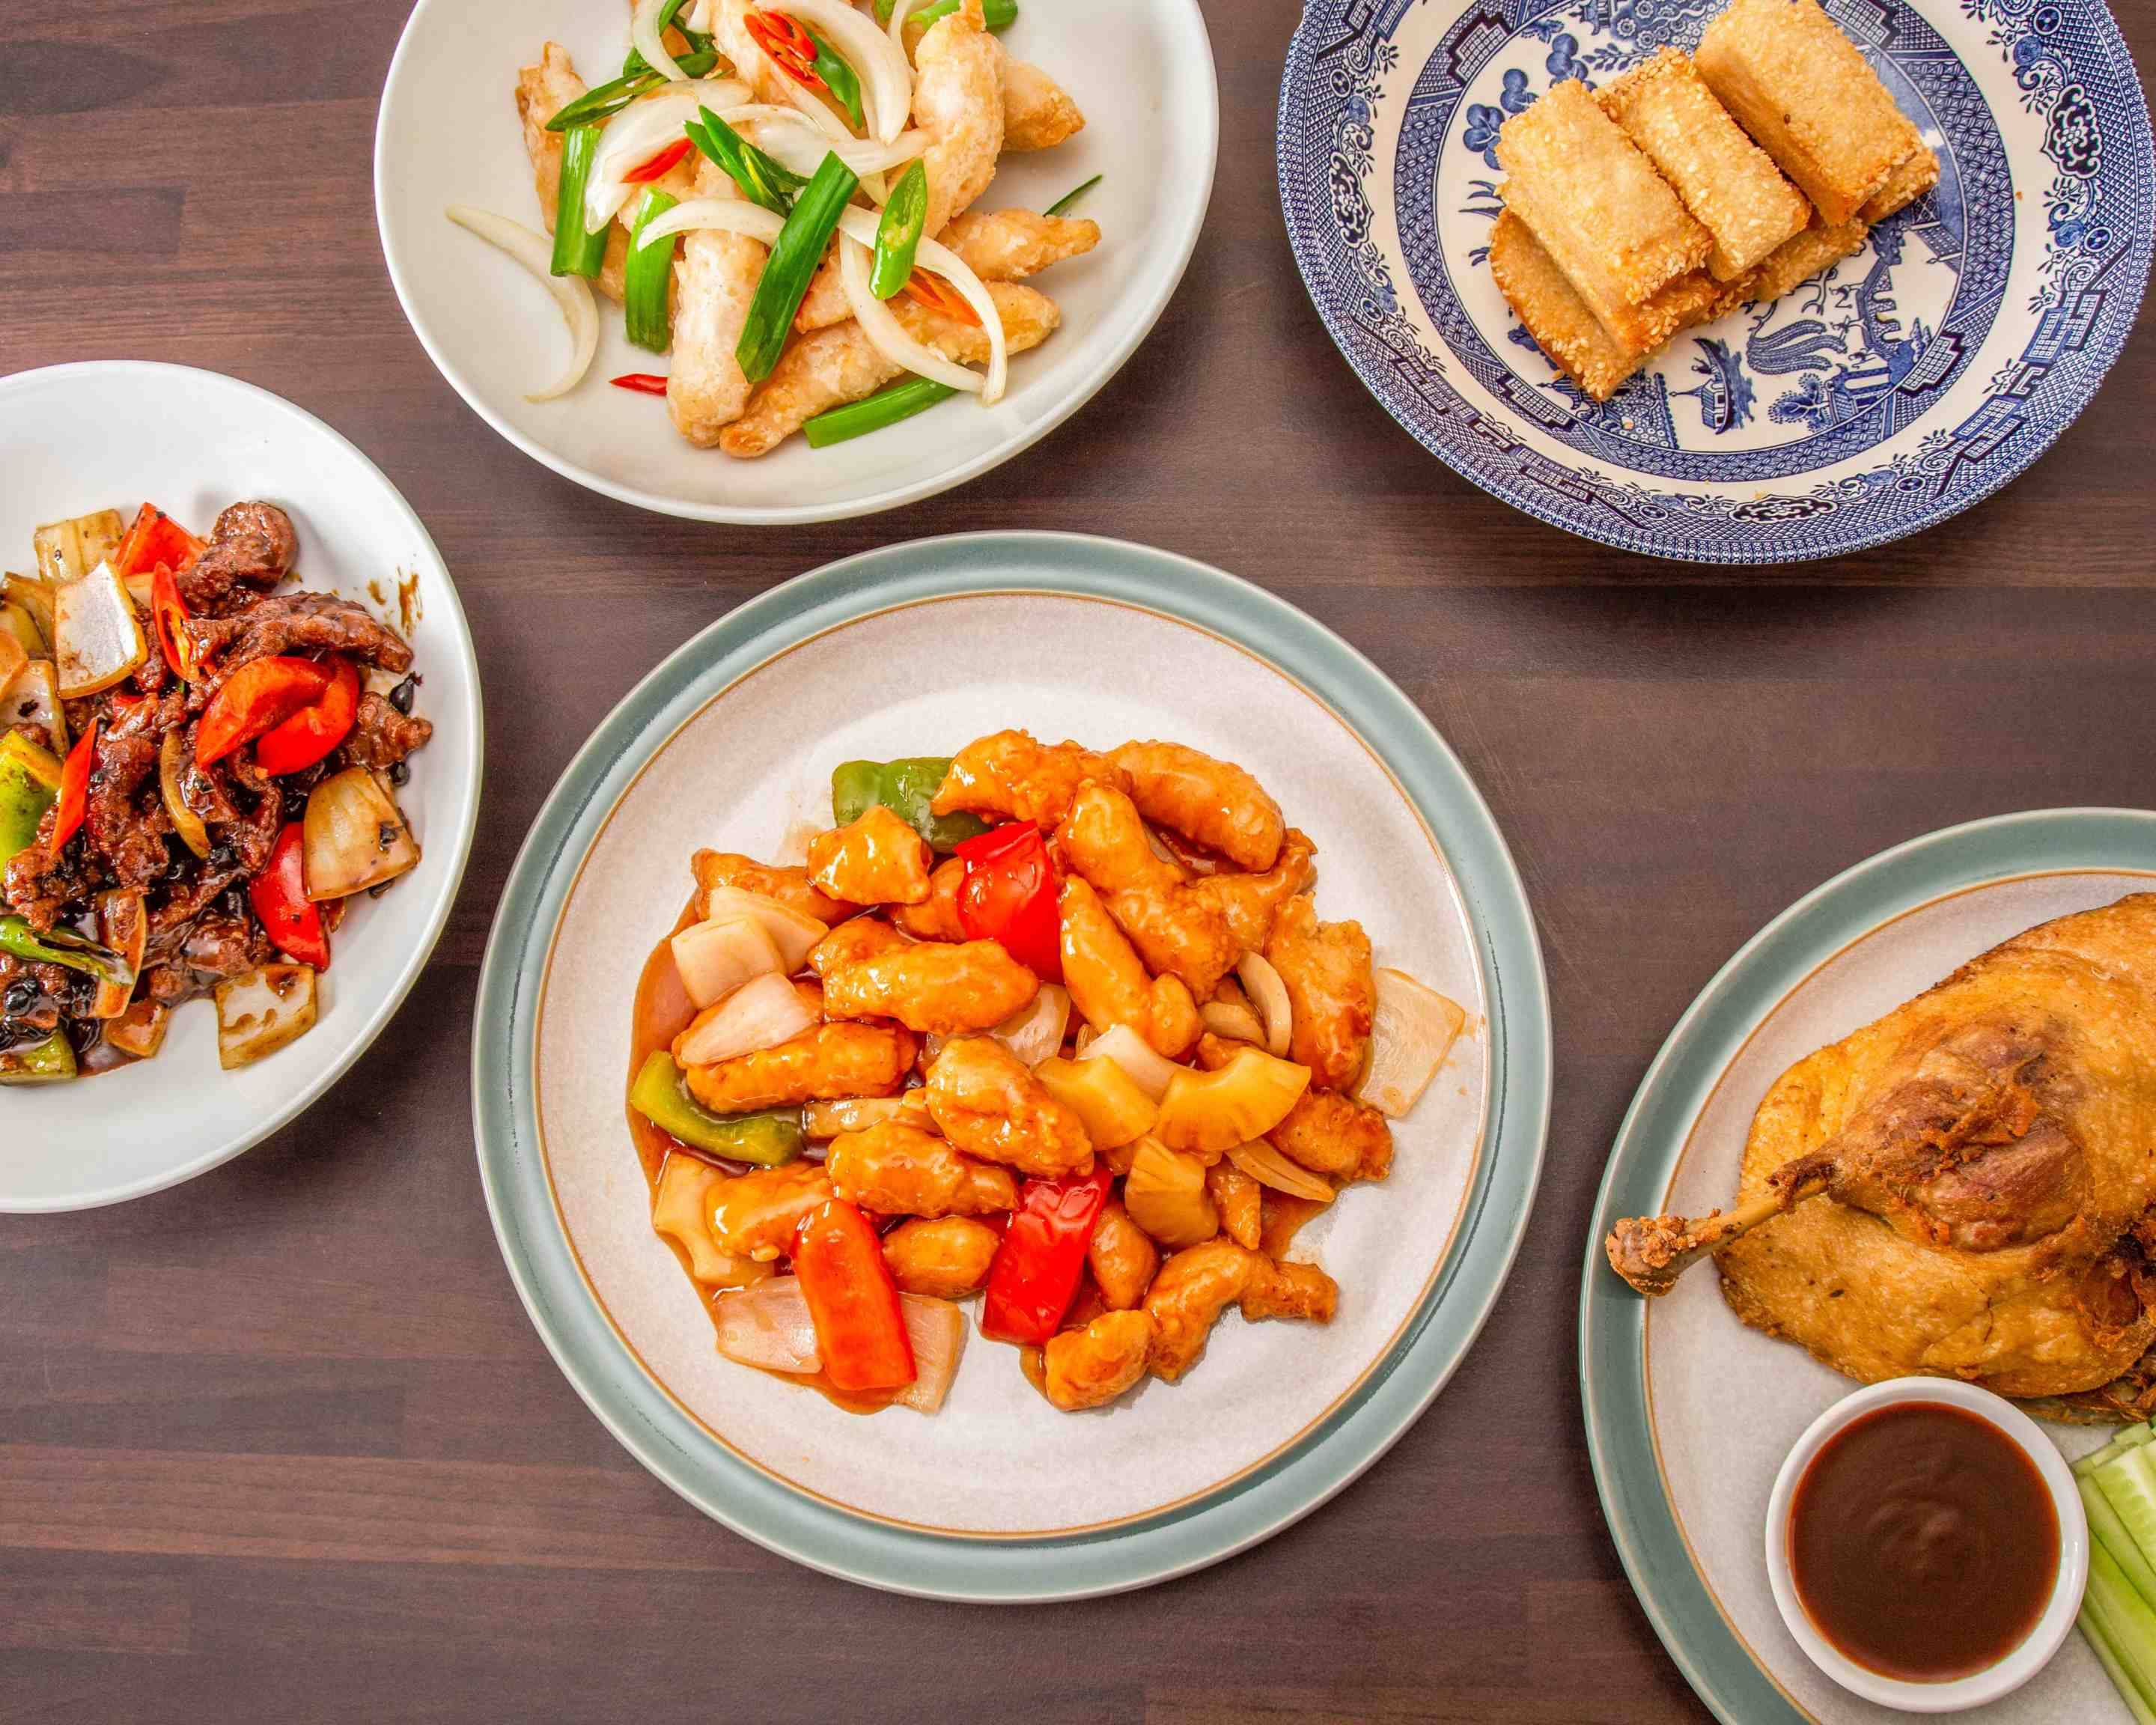 Chef Peking Menu - Takeaway in Luton | Delivery menu & prices | Uber Eats